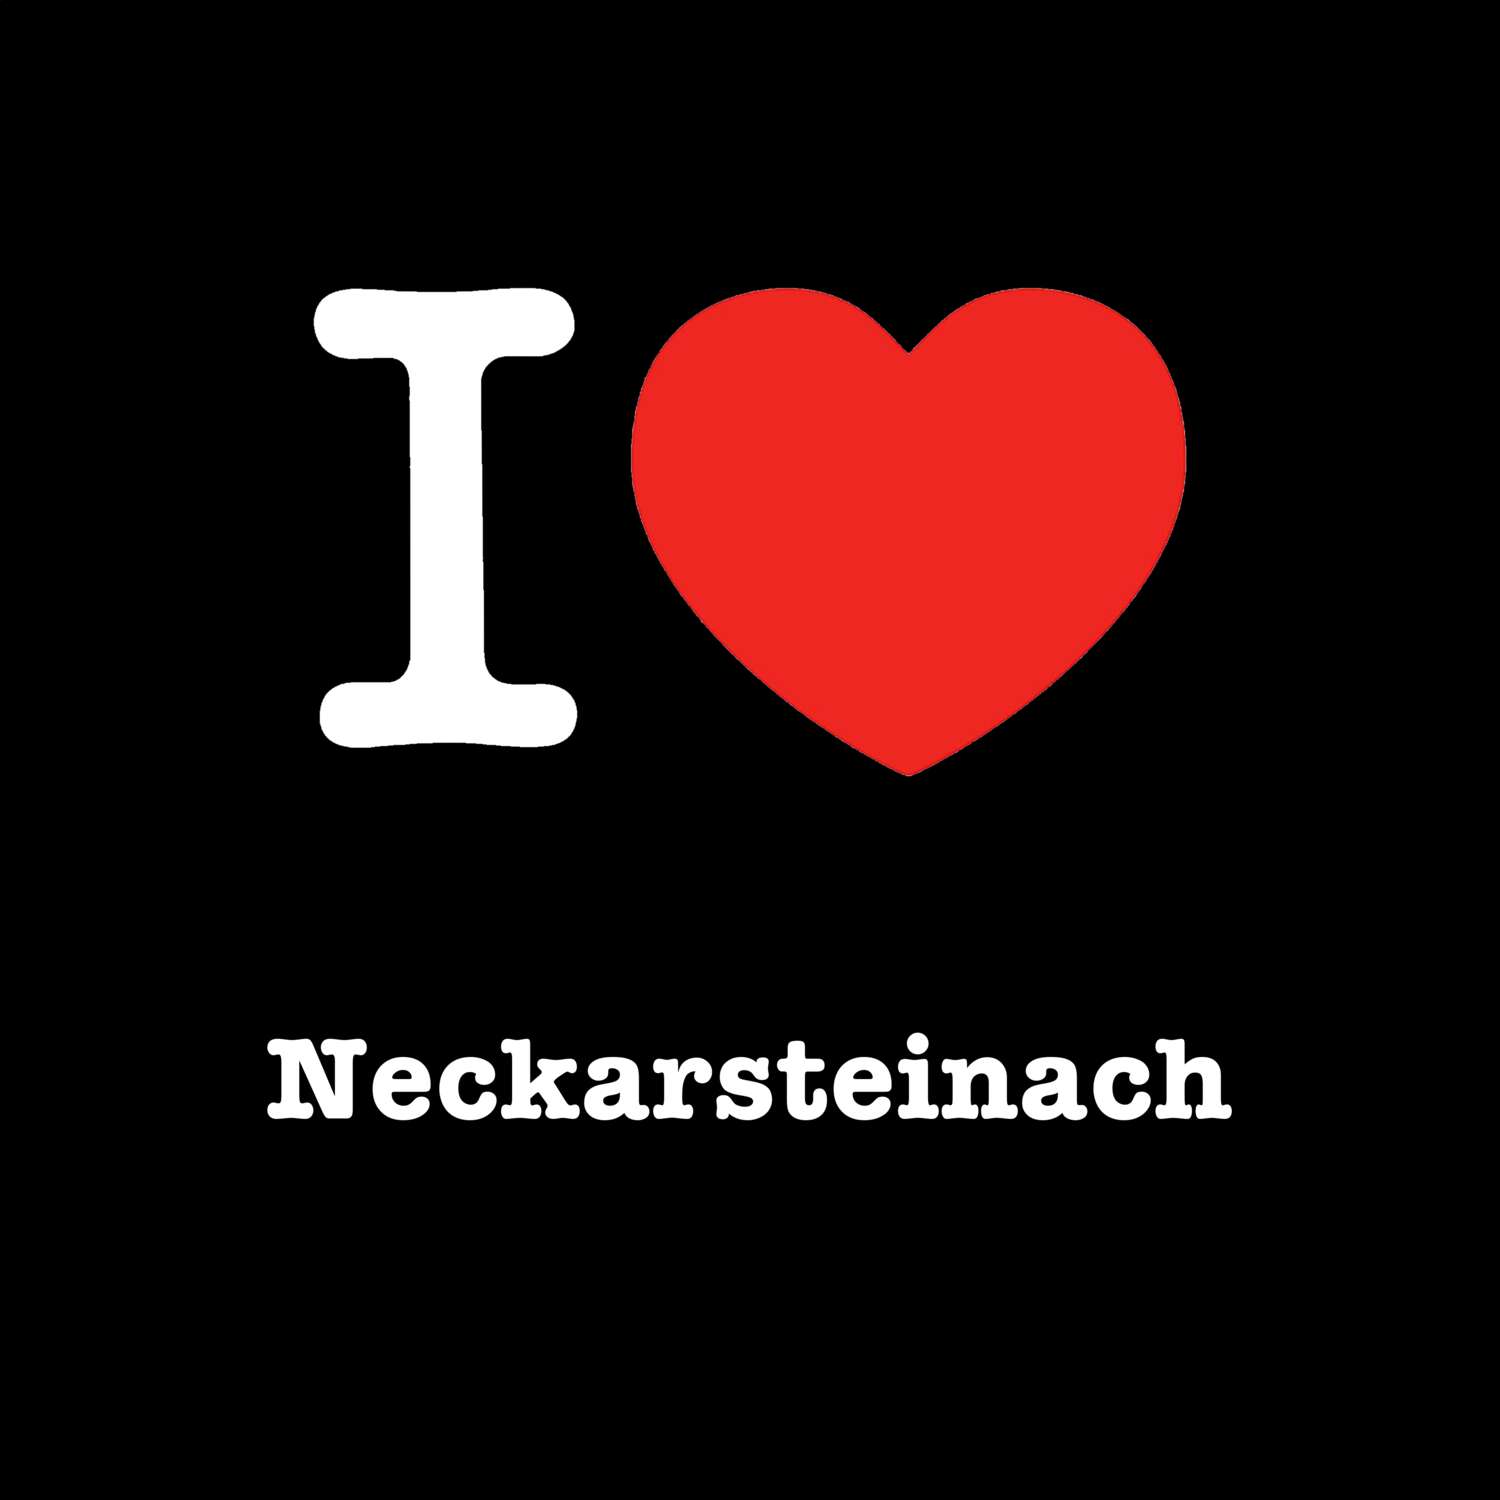 Neckarsteinach T-Shirt »I love«